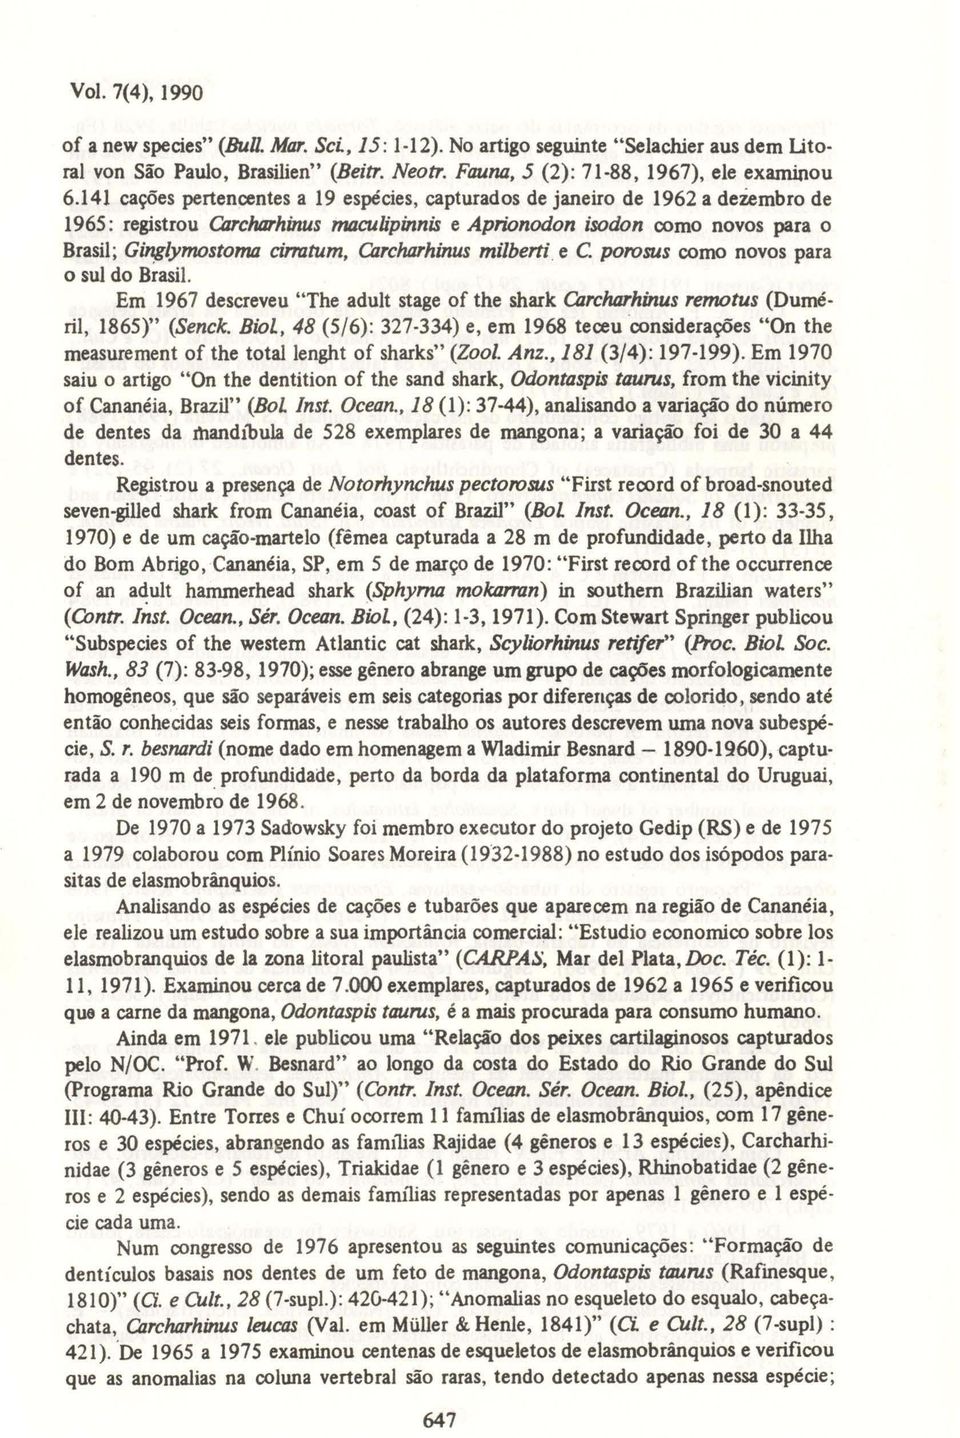 embro de 1965: registrou Carchlll'hinus maculipinnis e Aprionodon isodon como novos para o Brasil; Gi~/ymostoma cirratum, Carcharhinus mi/berti. e C. porosus como novos para o sul do Brasil.